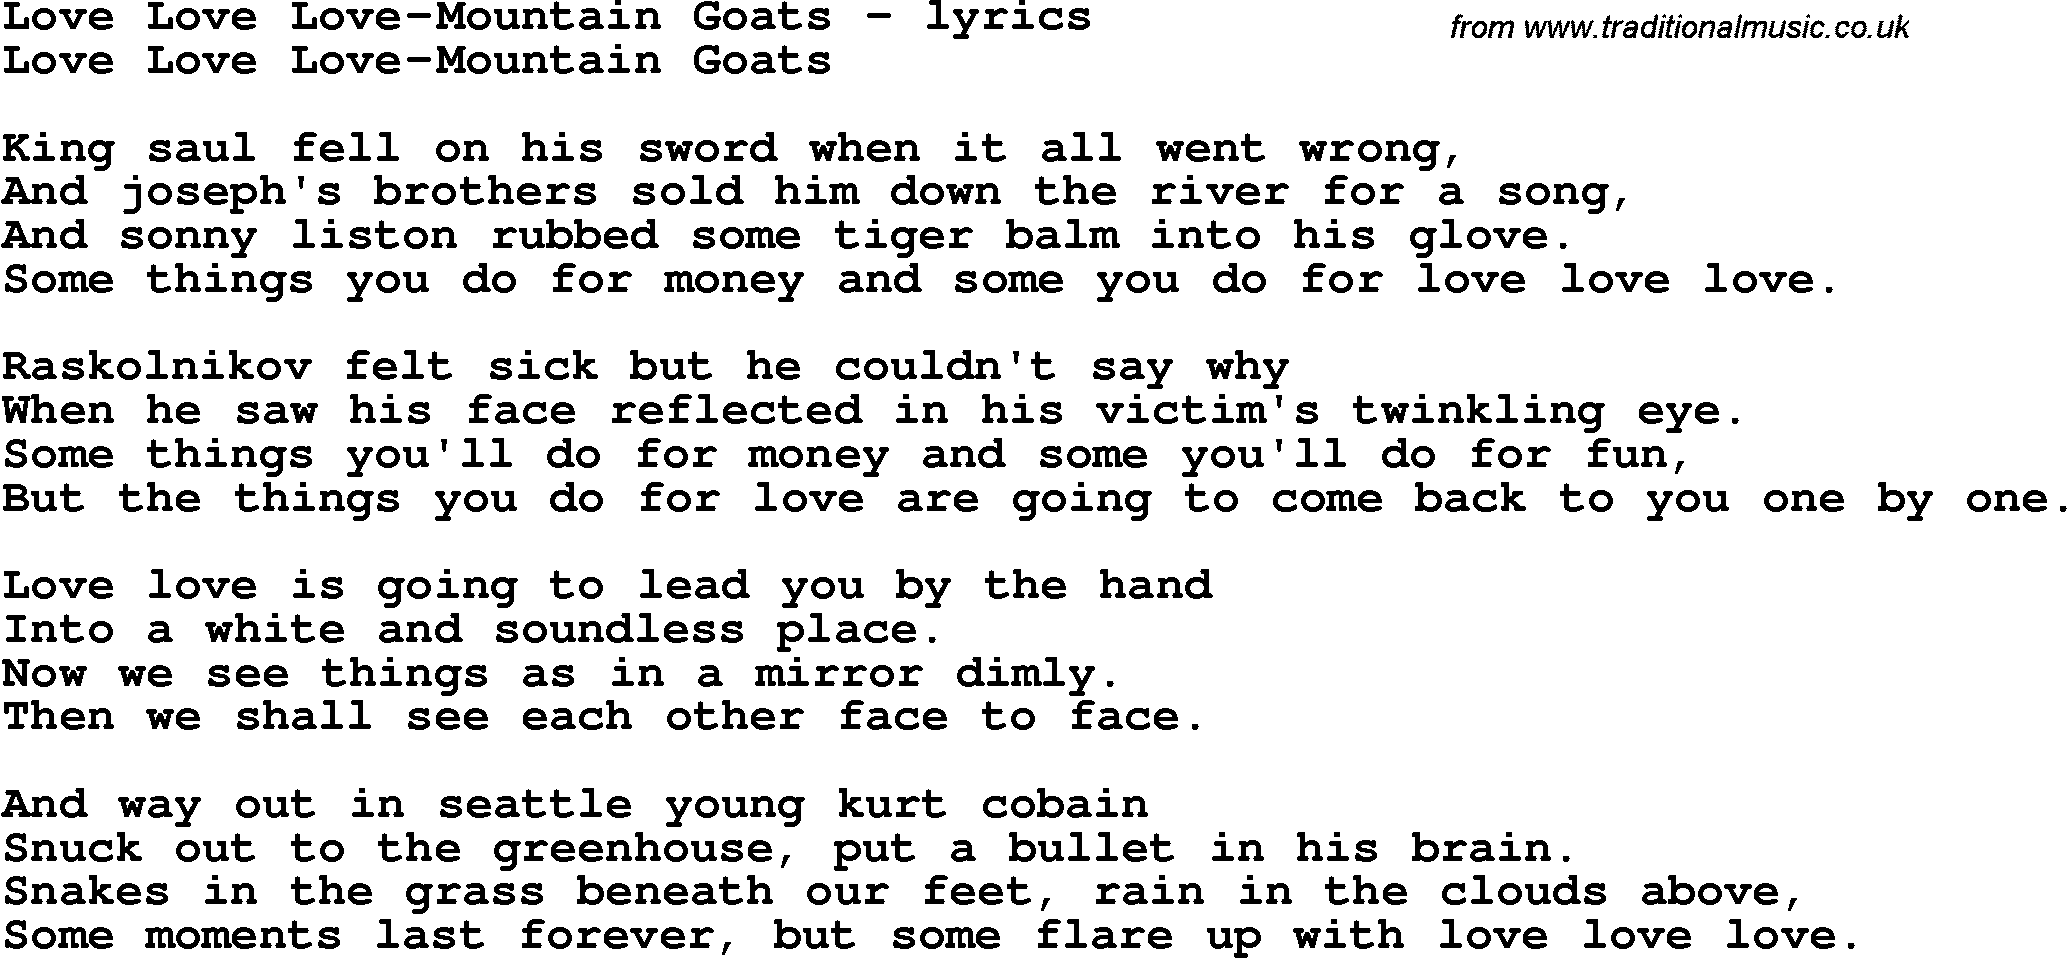 Love Song Lyrics for: Love Love Love-Mountain Goats